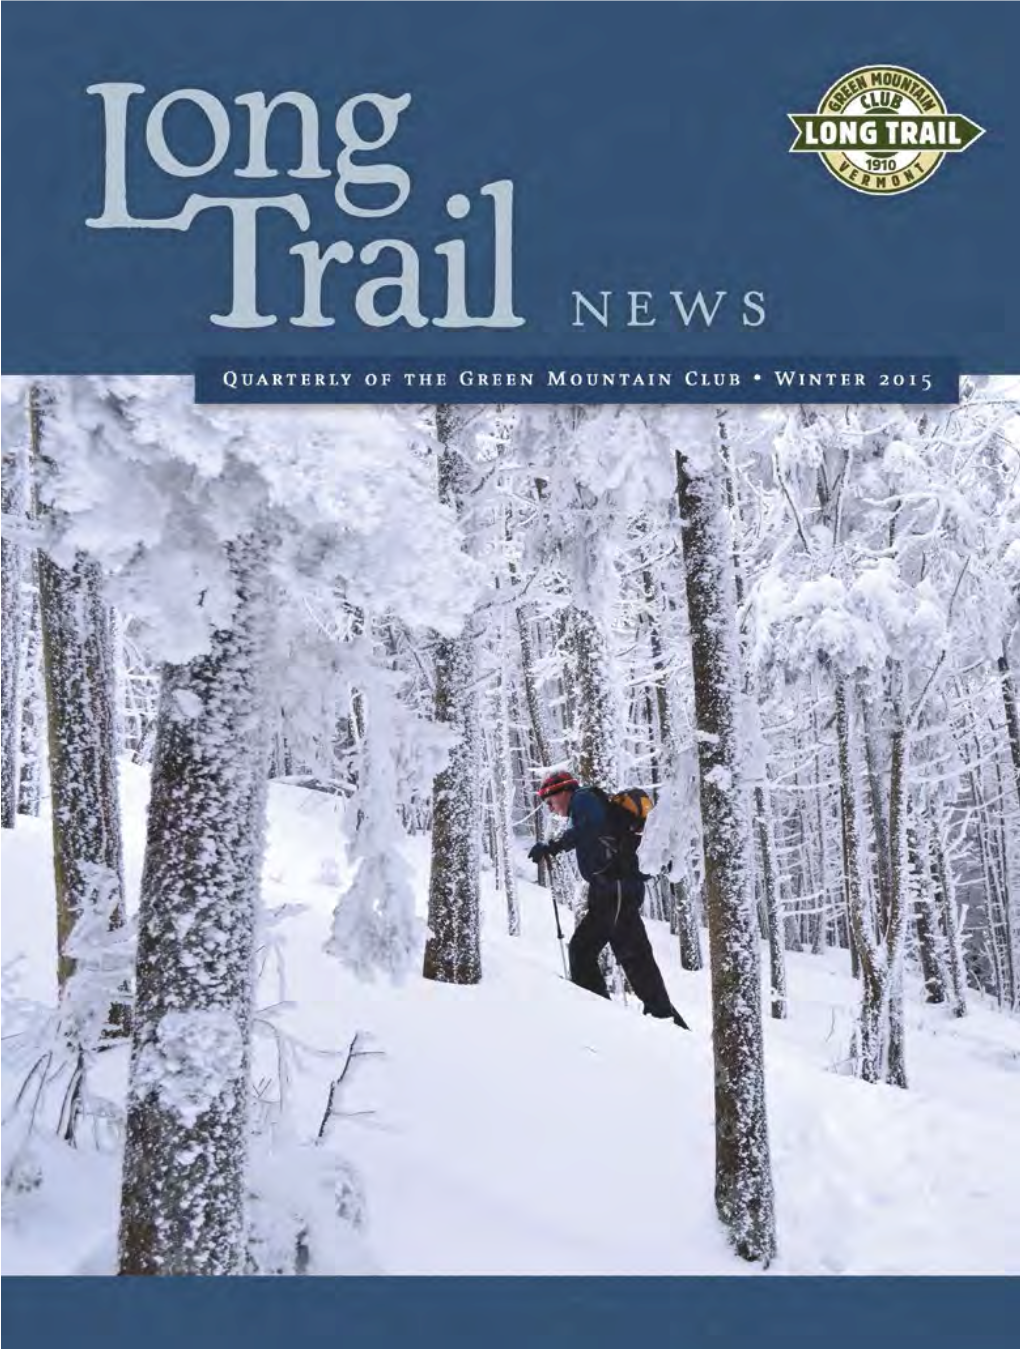 Long Trail News Editor Richard Andrews, Volunteer Copy Editor Winter 2015, Volume 75, No